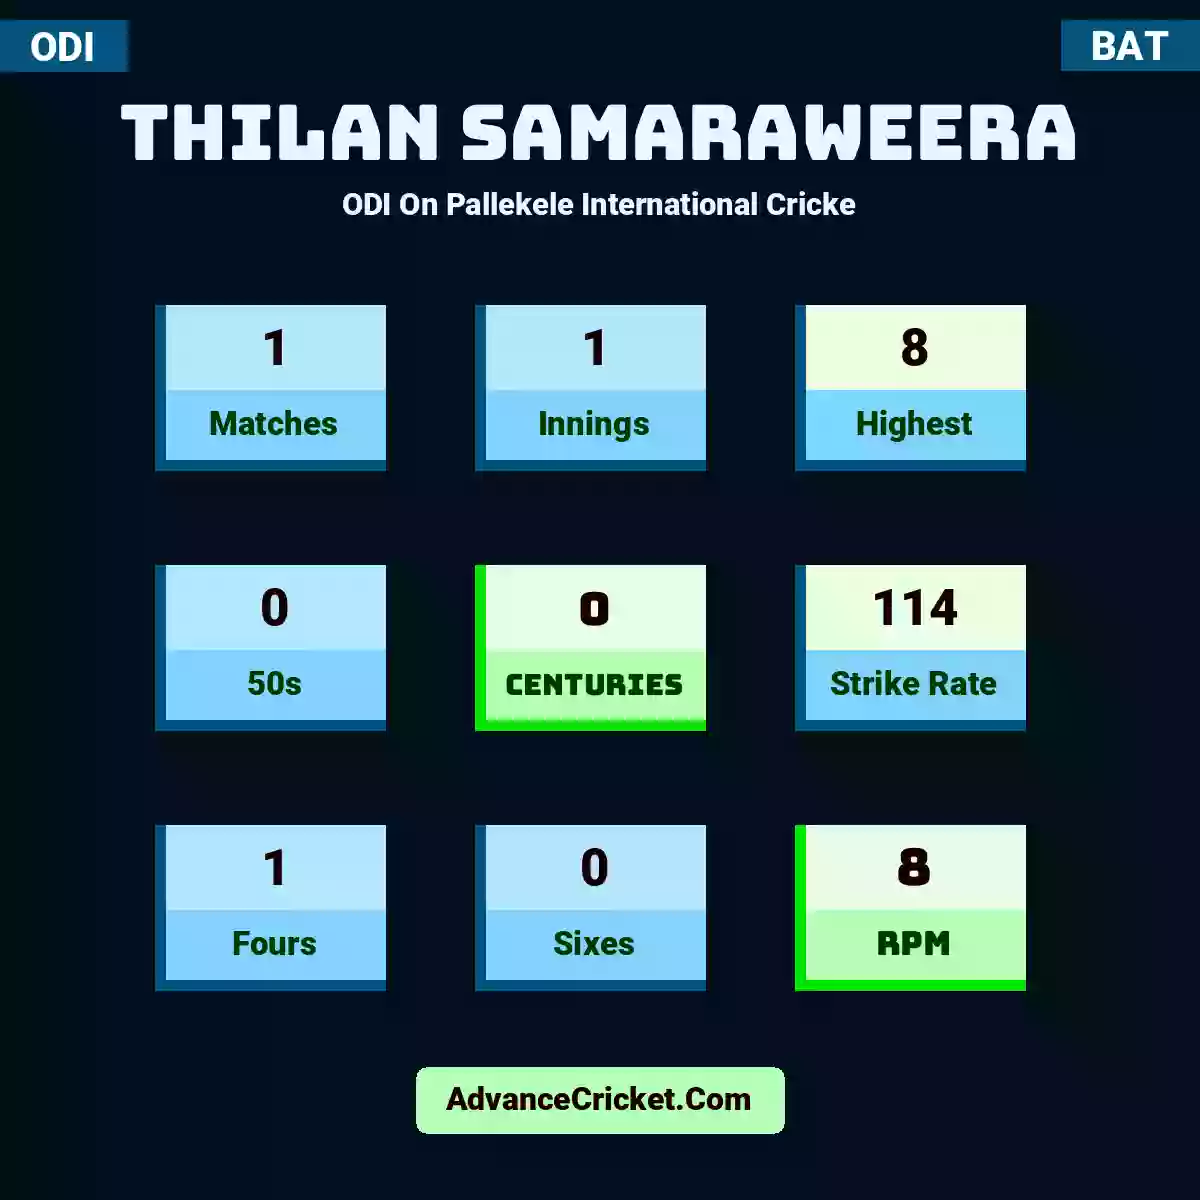 Thilan Samaraweera ODI  On Pallekele International Cricke, Thilan Samaraweera played 1 matches, scored 8 runs as highest, 0 half-centuries, and 0 centuries, with a strike rate of 114. T.Samaraweera hit 1 fours and 0 sixes, with an RPM of 8.